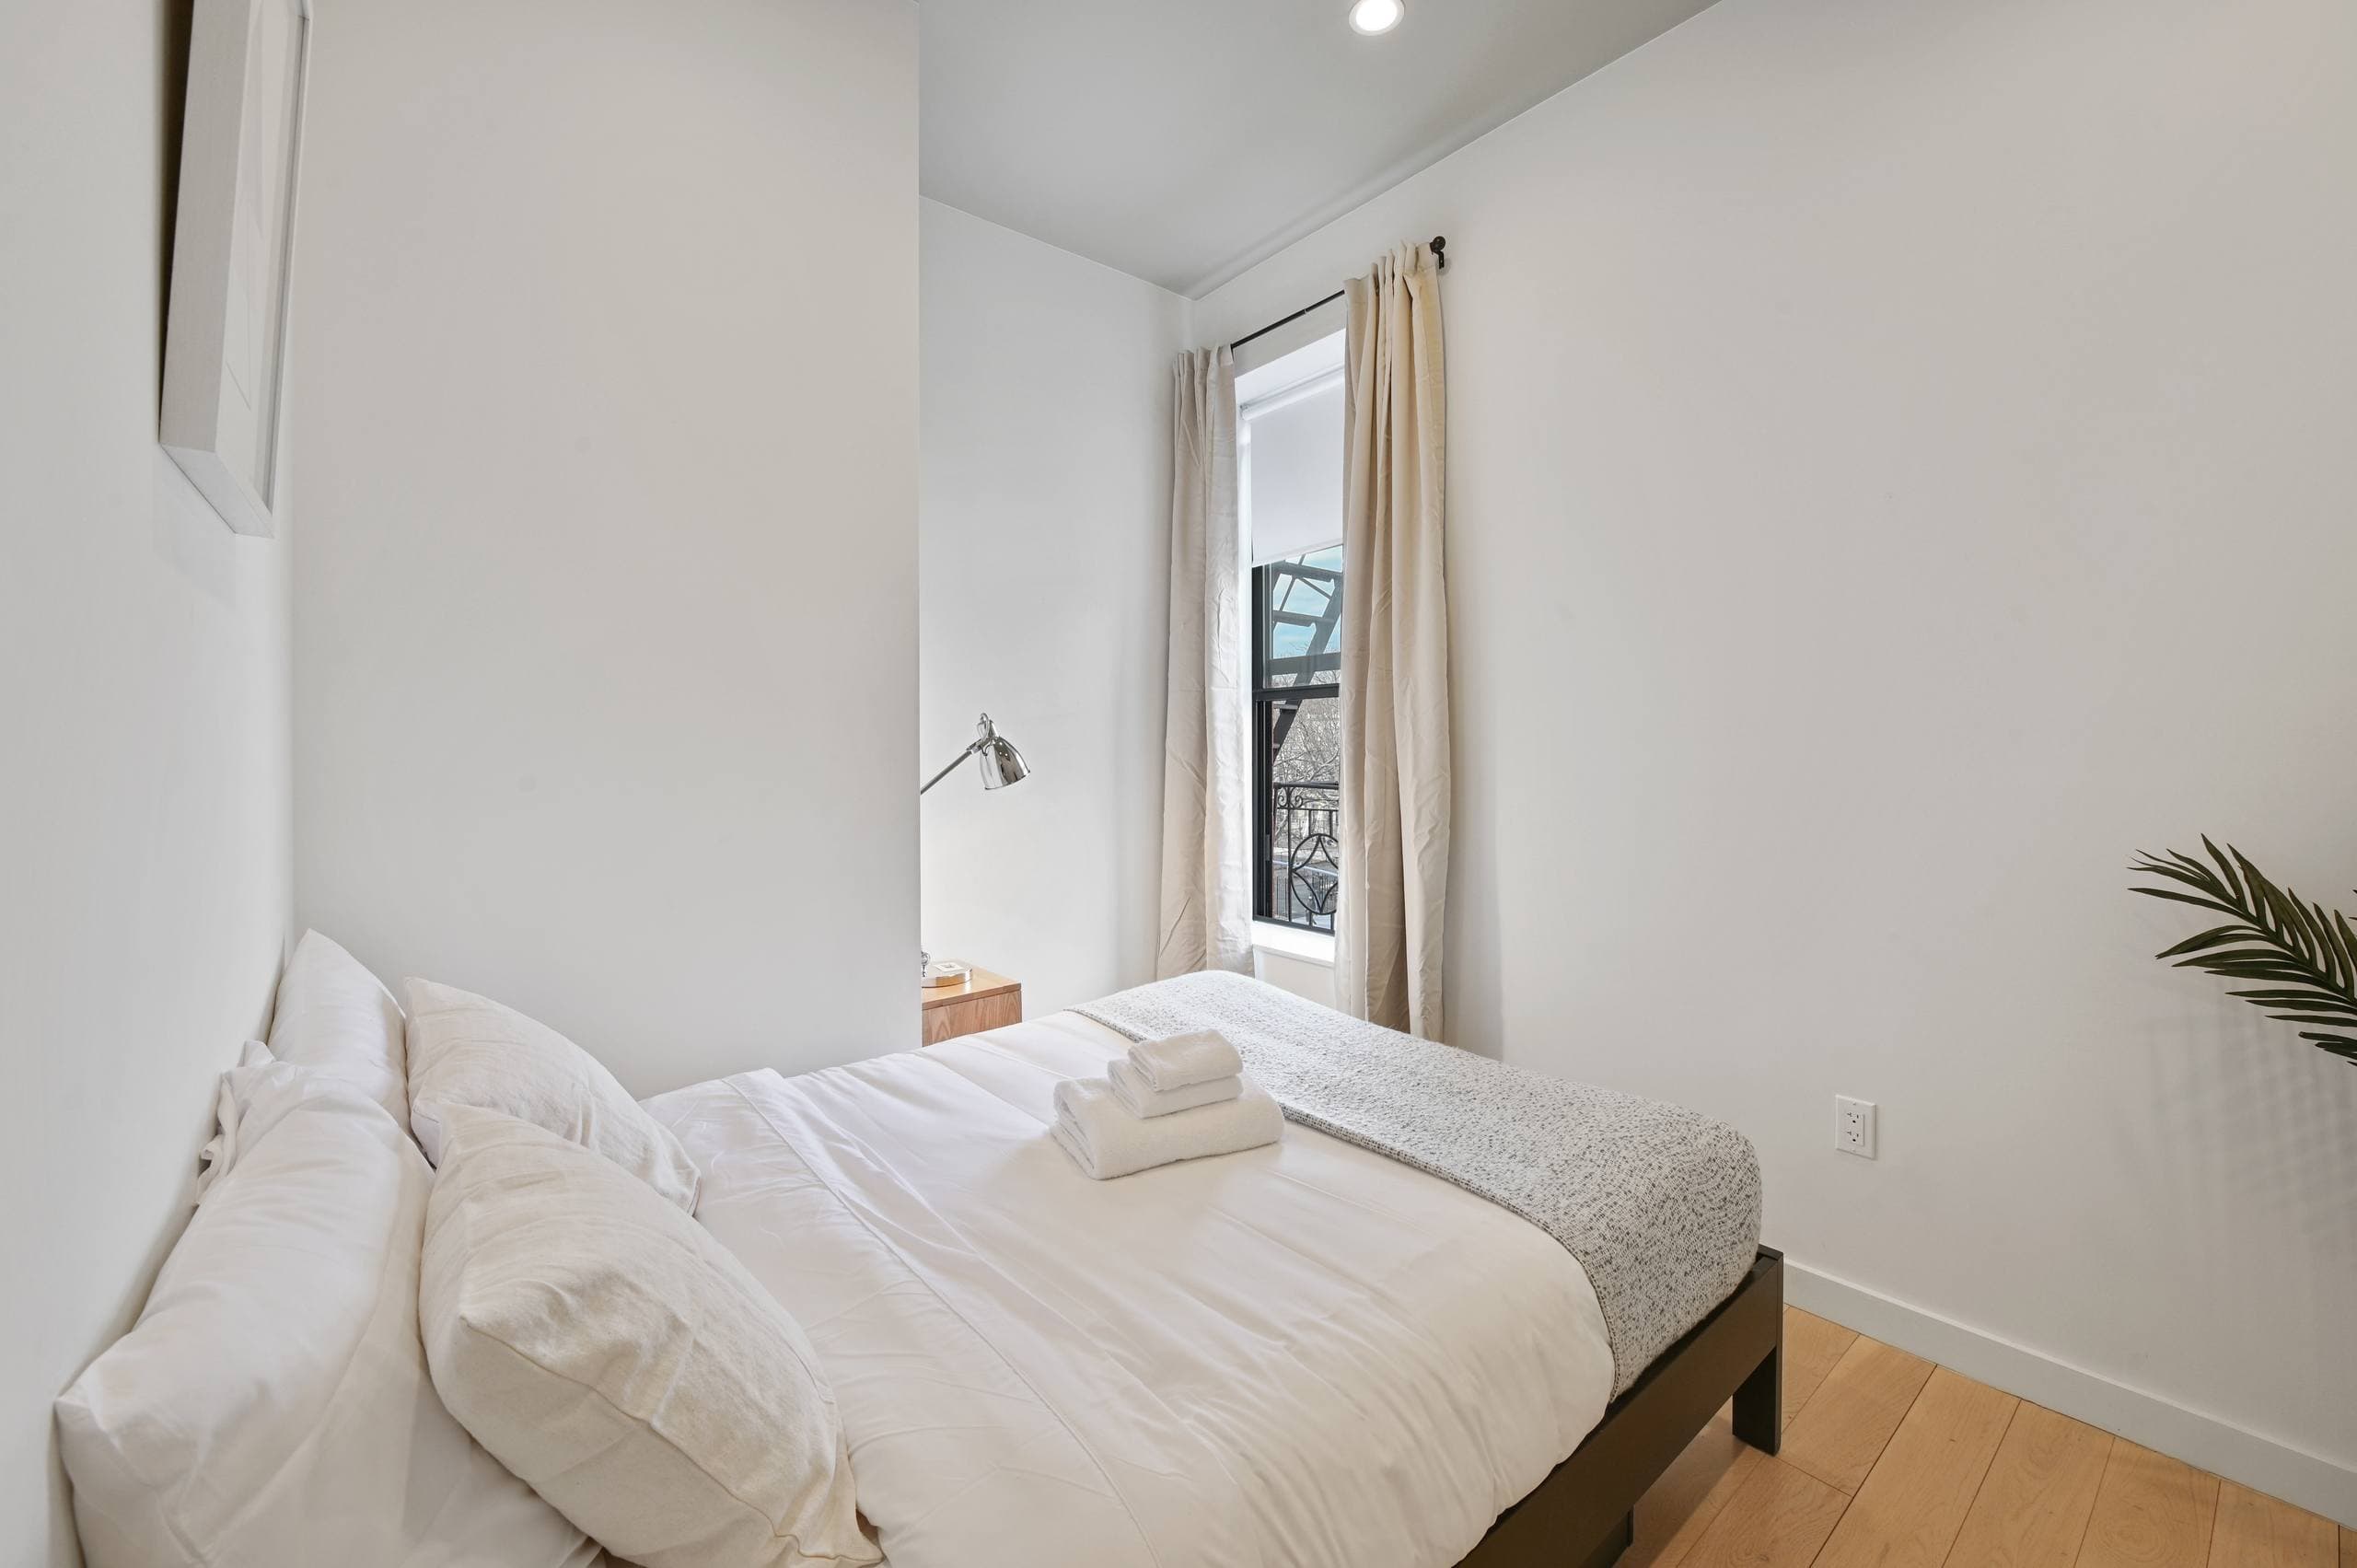 Photo 12 of #991: Full Bedroom 2B at June Homes